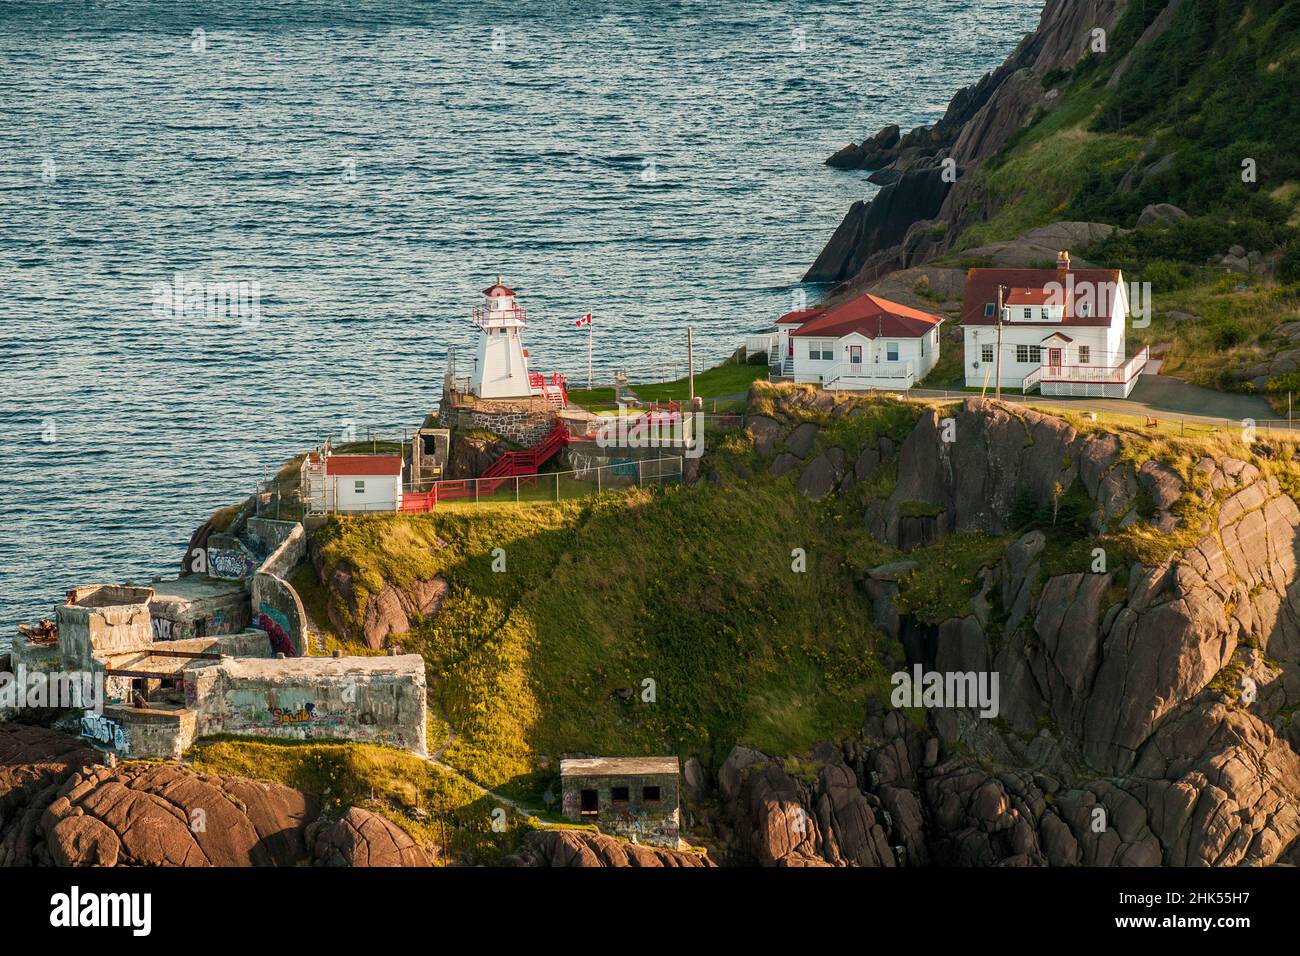 Fort Amherst Lighthouse, St. John's, Newfoundland, Canada, North America Stock Photo